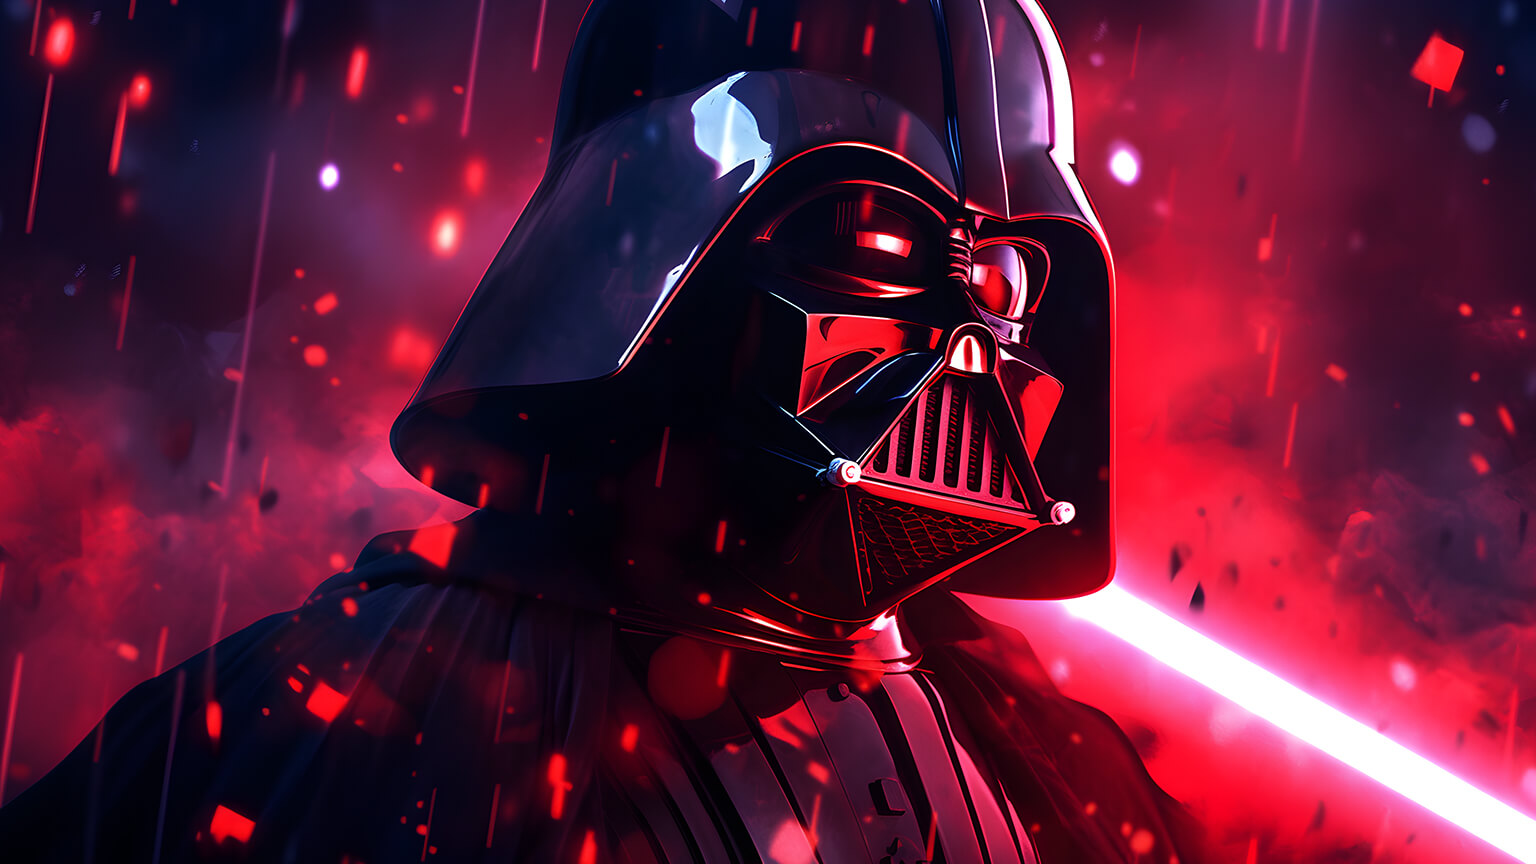 Star Wars Darth Vader Dark Red Wallpaper for Desktop & Laptop